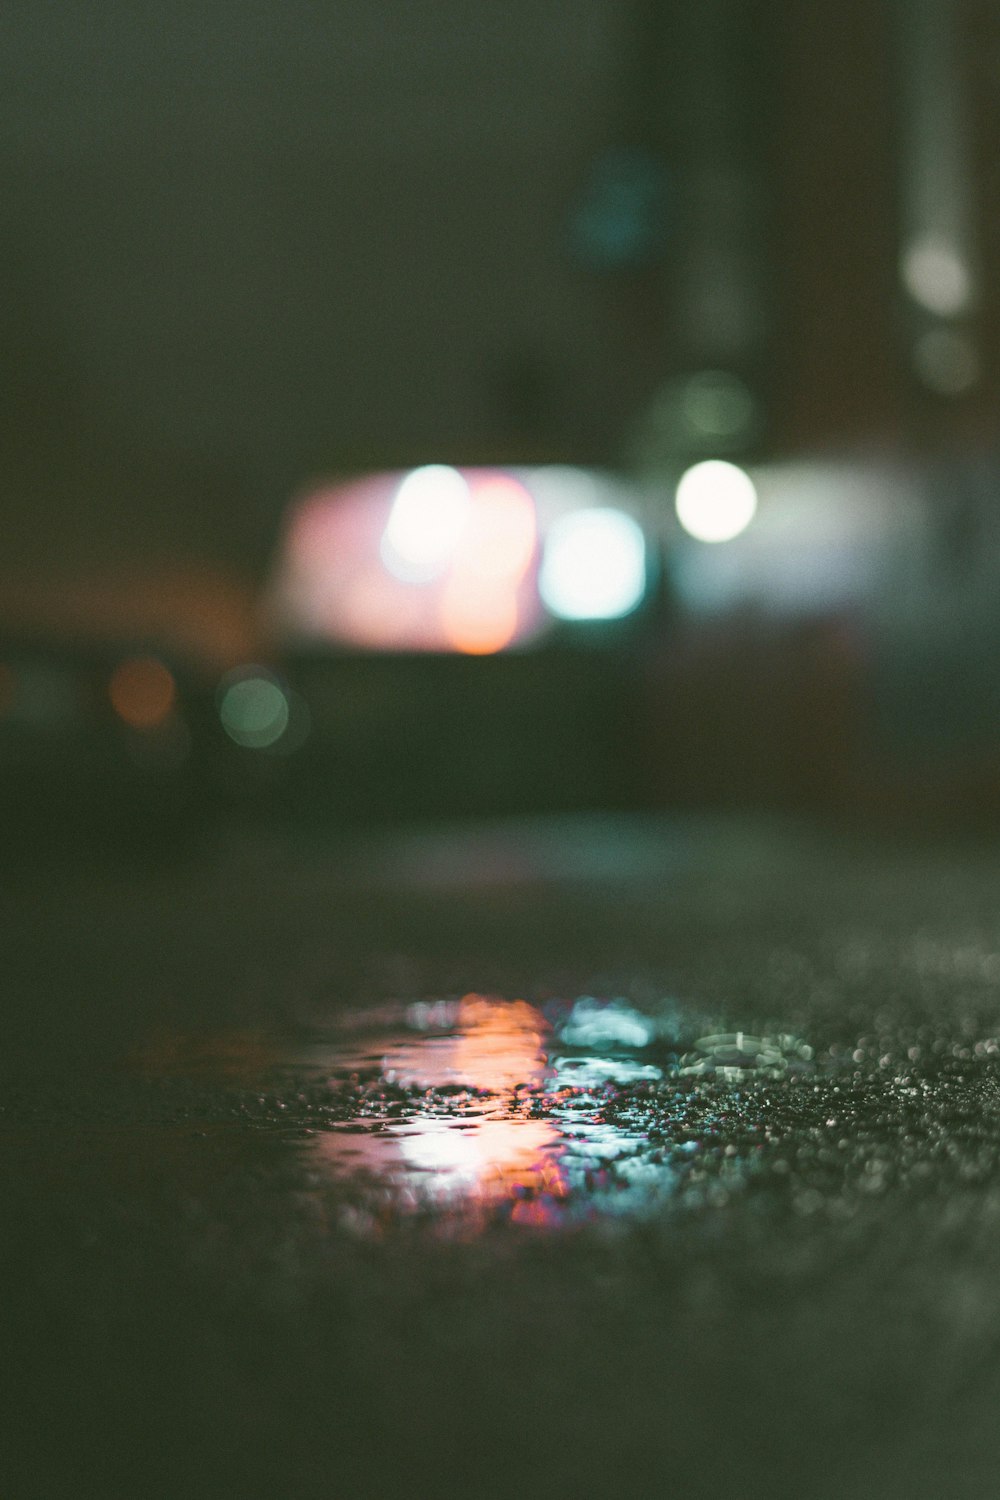 water droplets on black asphalt road during night time